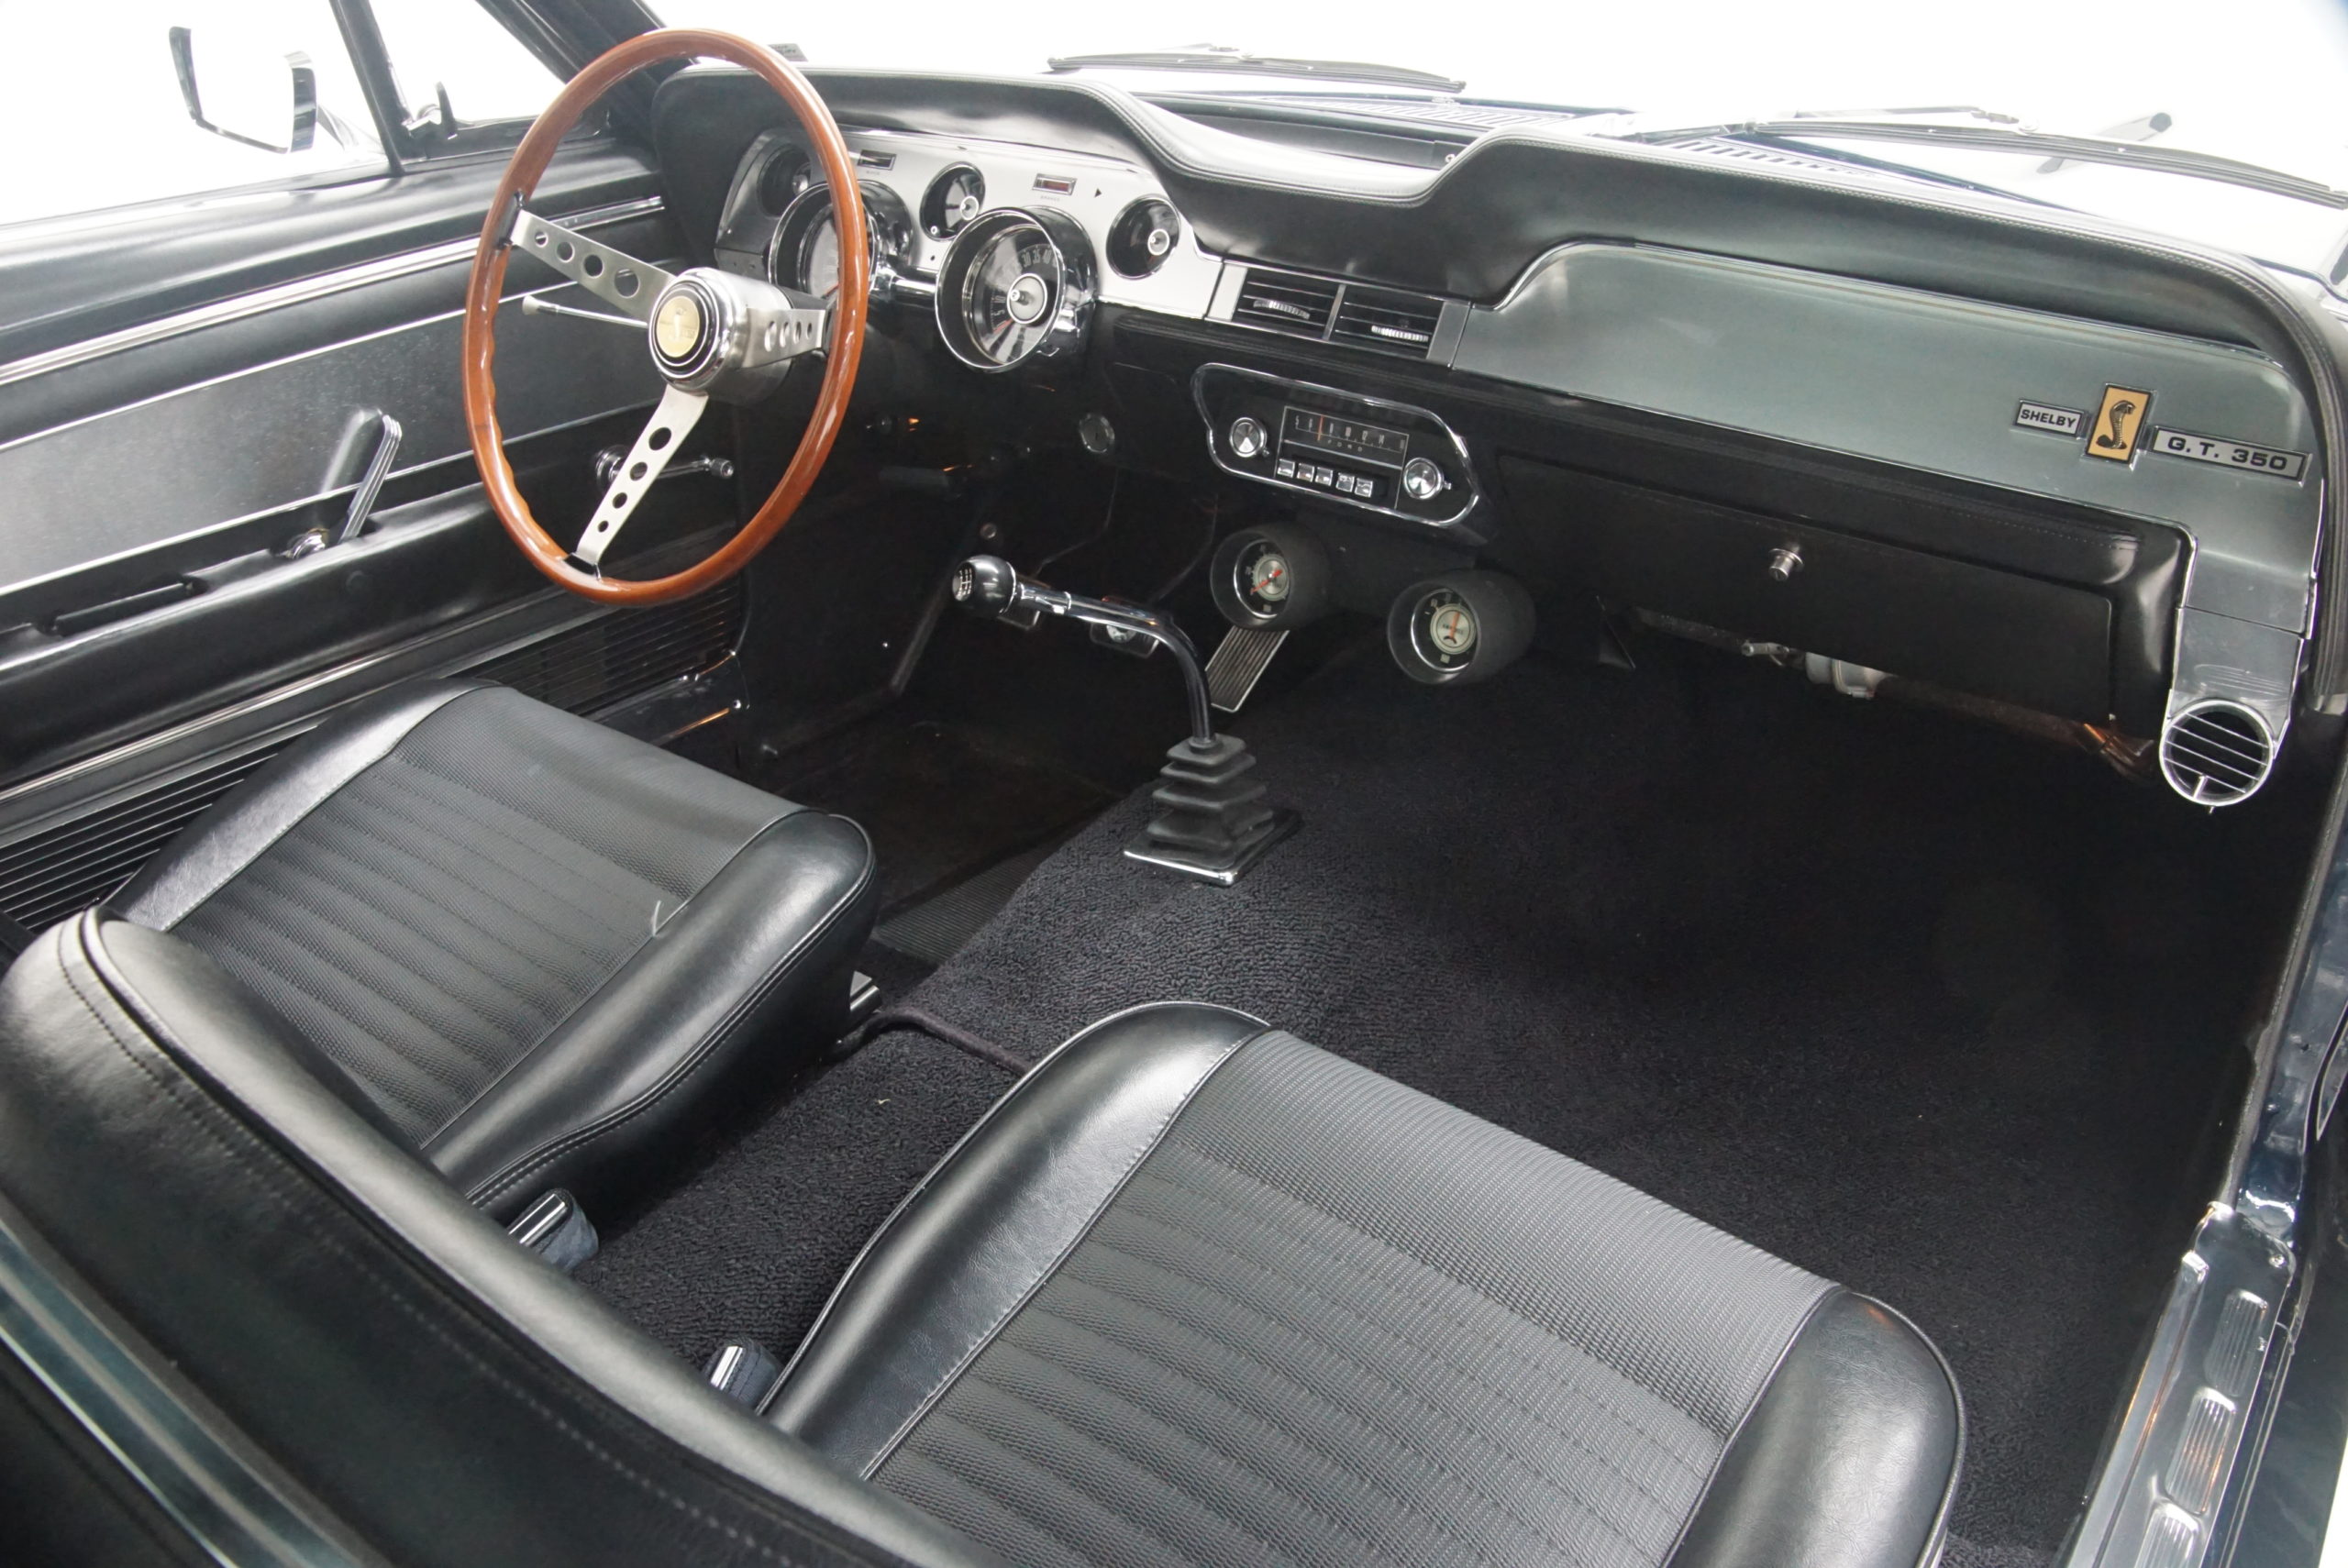 1967 Shelby Mustang GT350 Fastback intérieur tableau de bord - Shannons Auctions avril 2021.